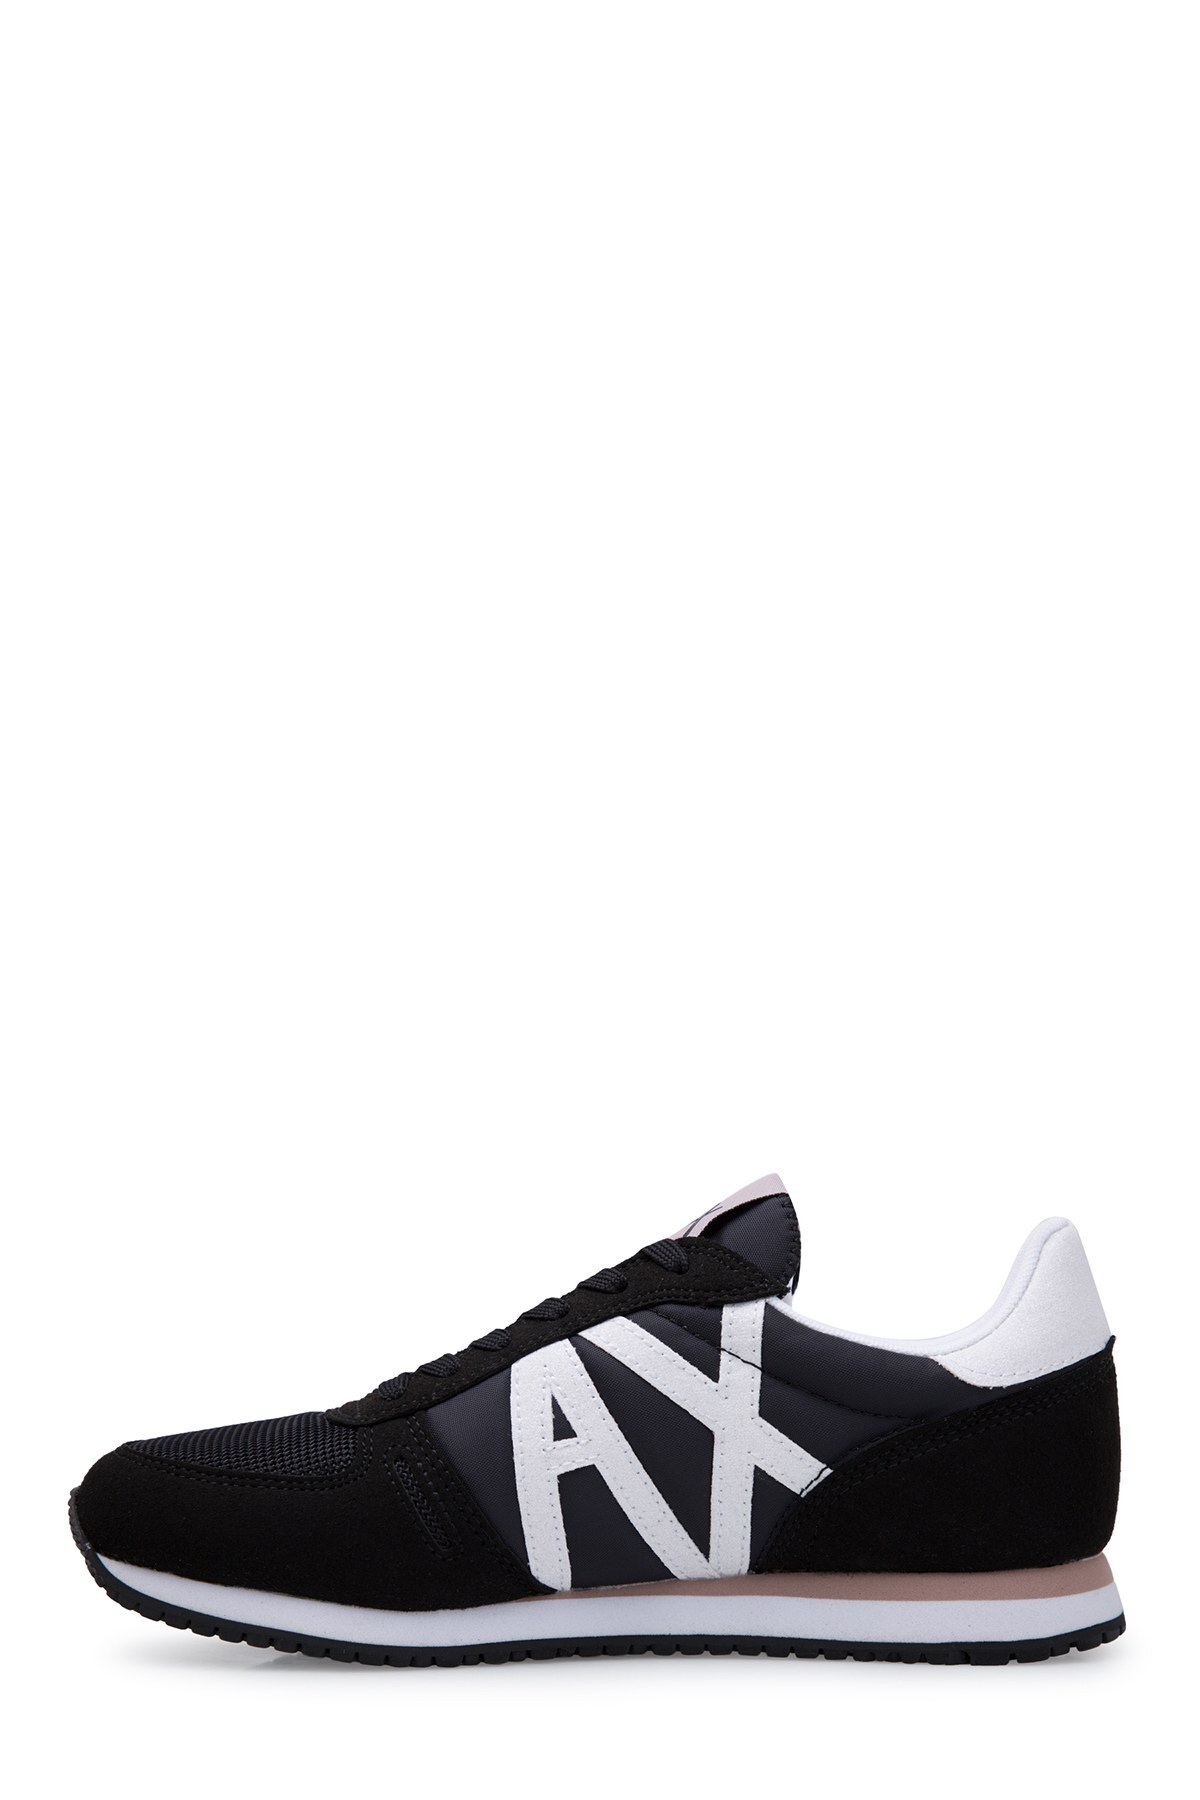 Armani Exchange Kadın Ayakkabı XDX031 XV308 A120 SİYAH